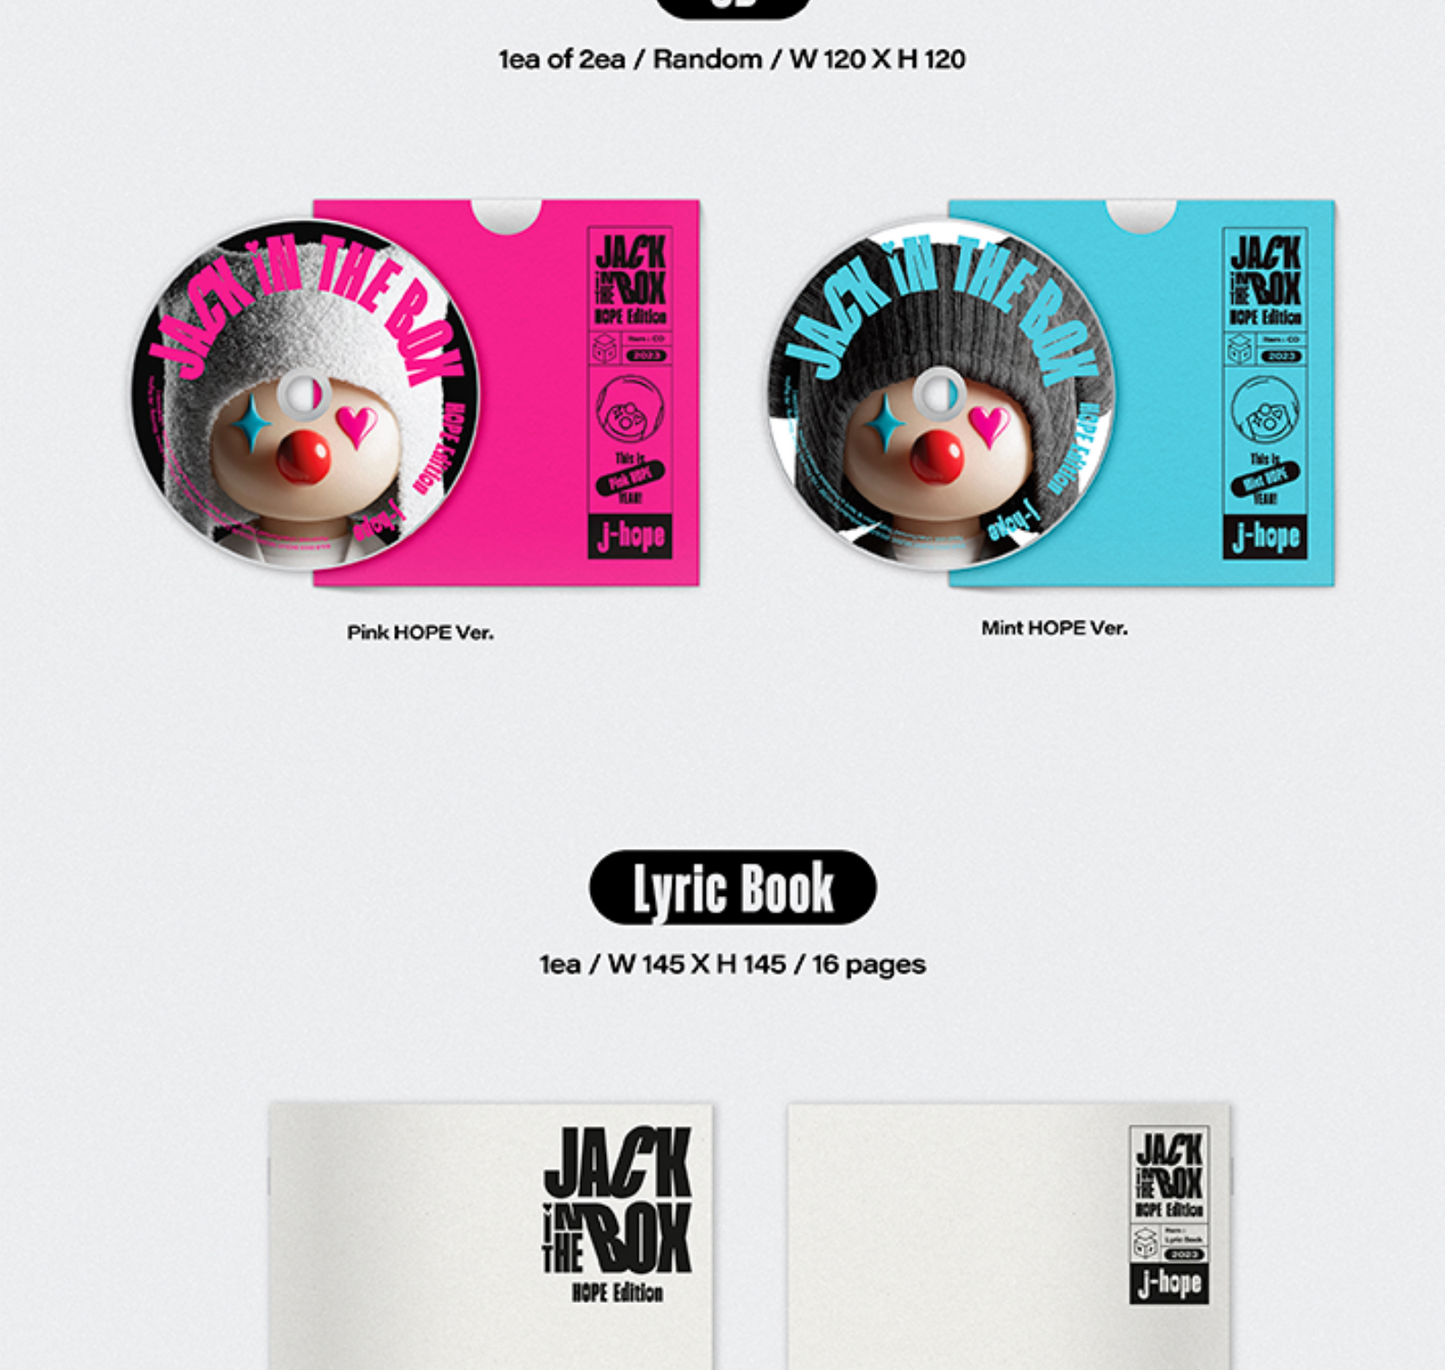 BTS J-HOPE - JACK IN THE BOX 1ST SINGLE ALBUM HOPE EDITION